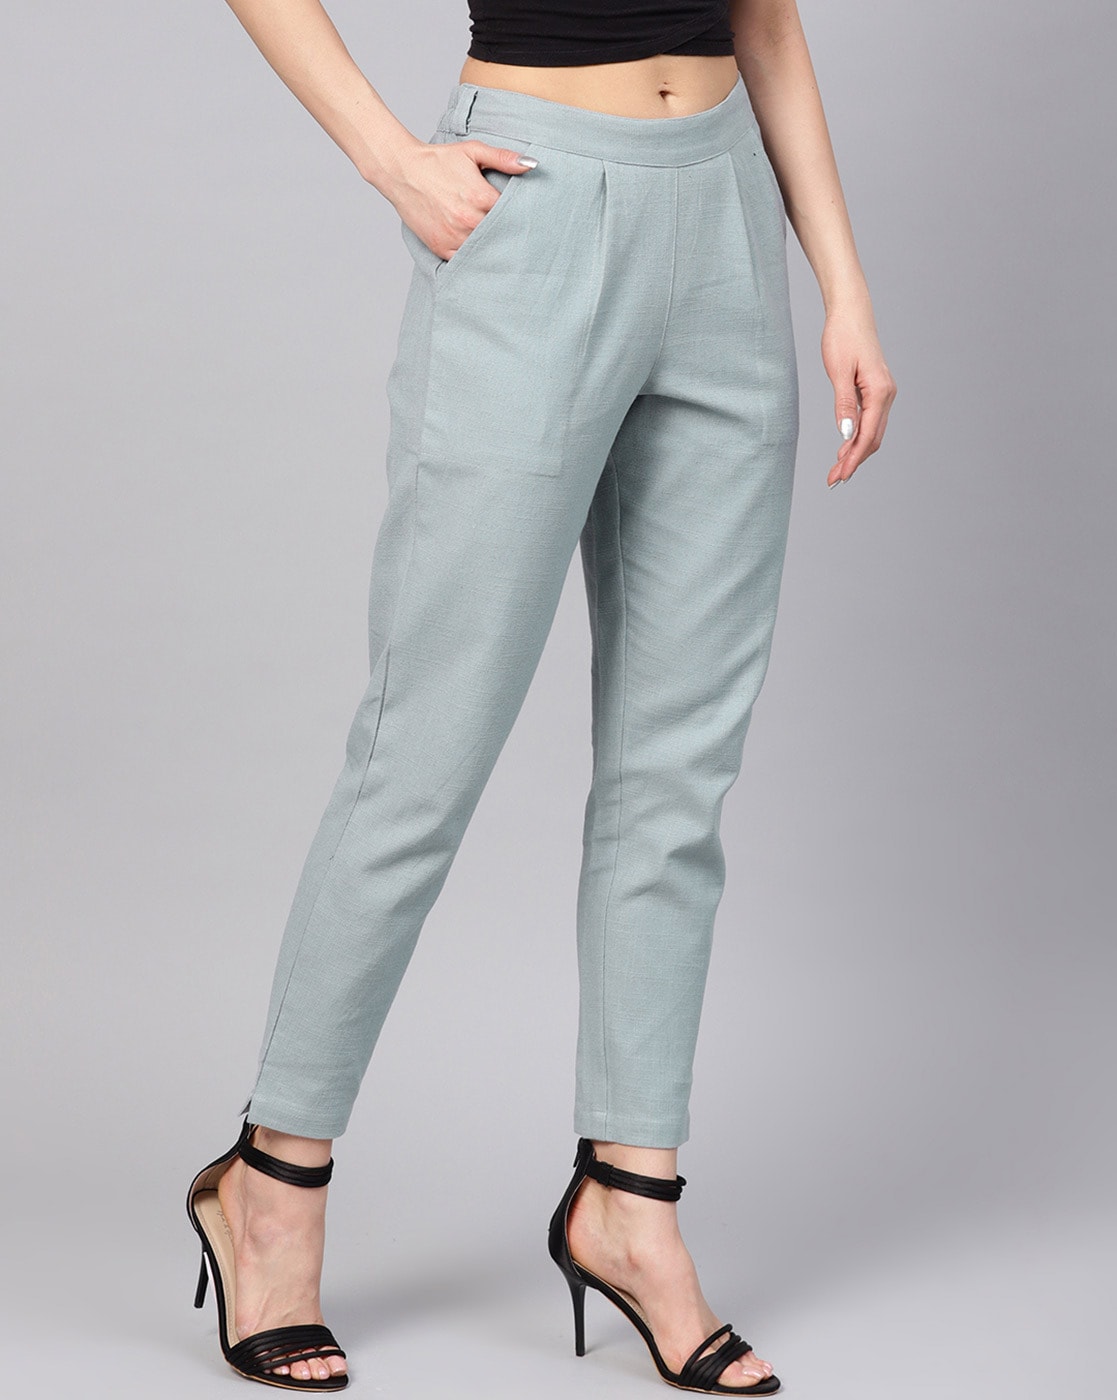 Buy VAN HEUSEN Grey Womens 4 Pocket Solid Formal Pants  Shoppers Stop